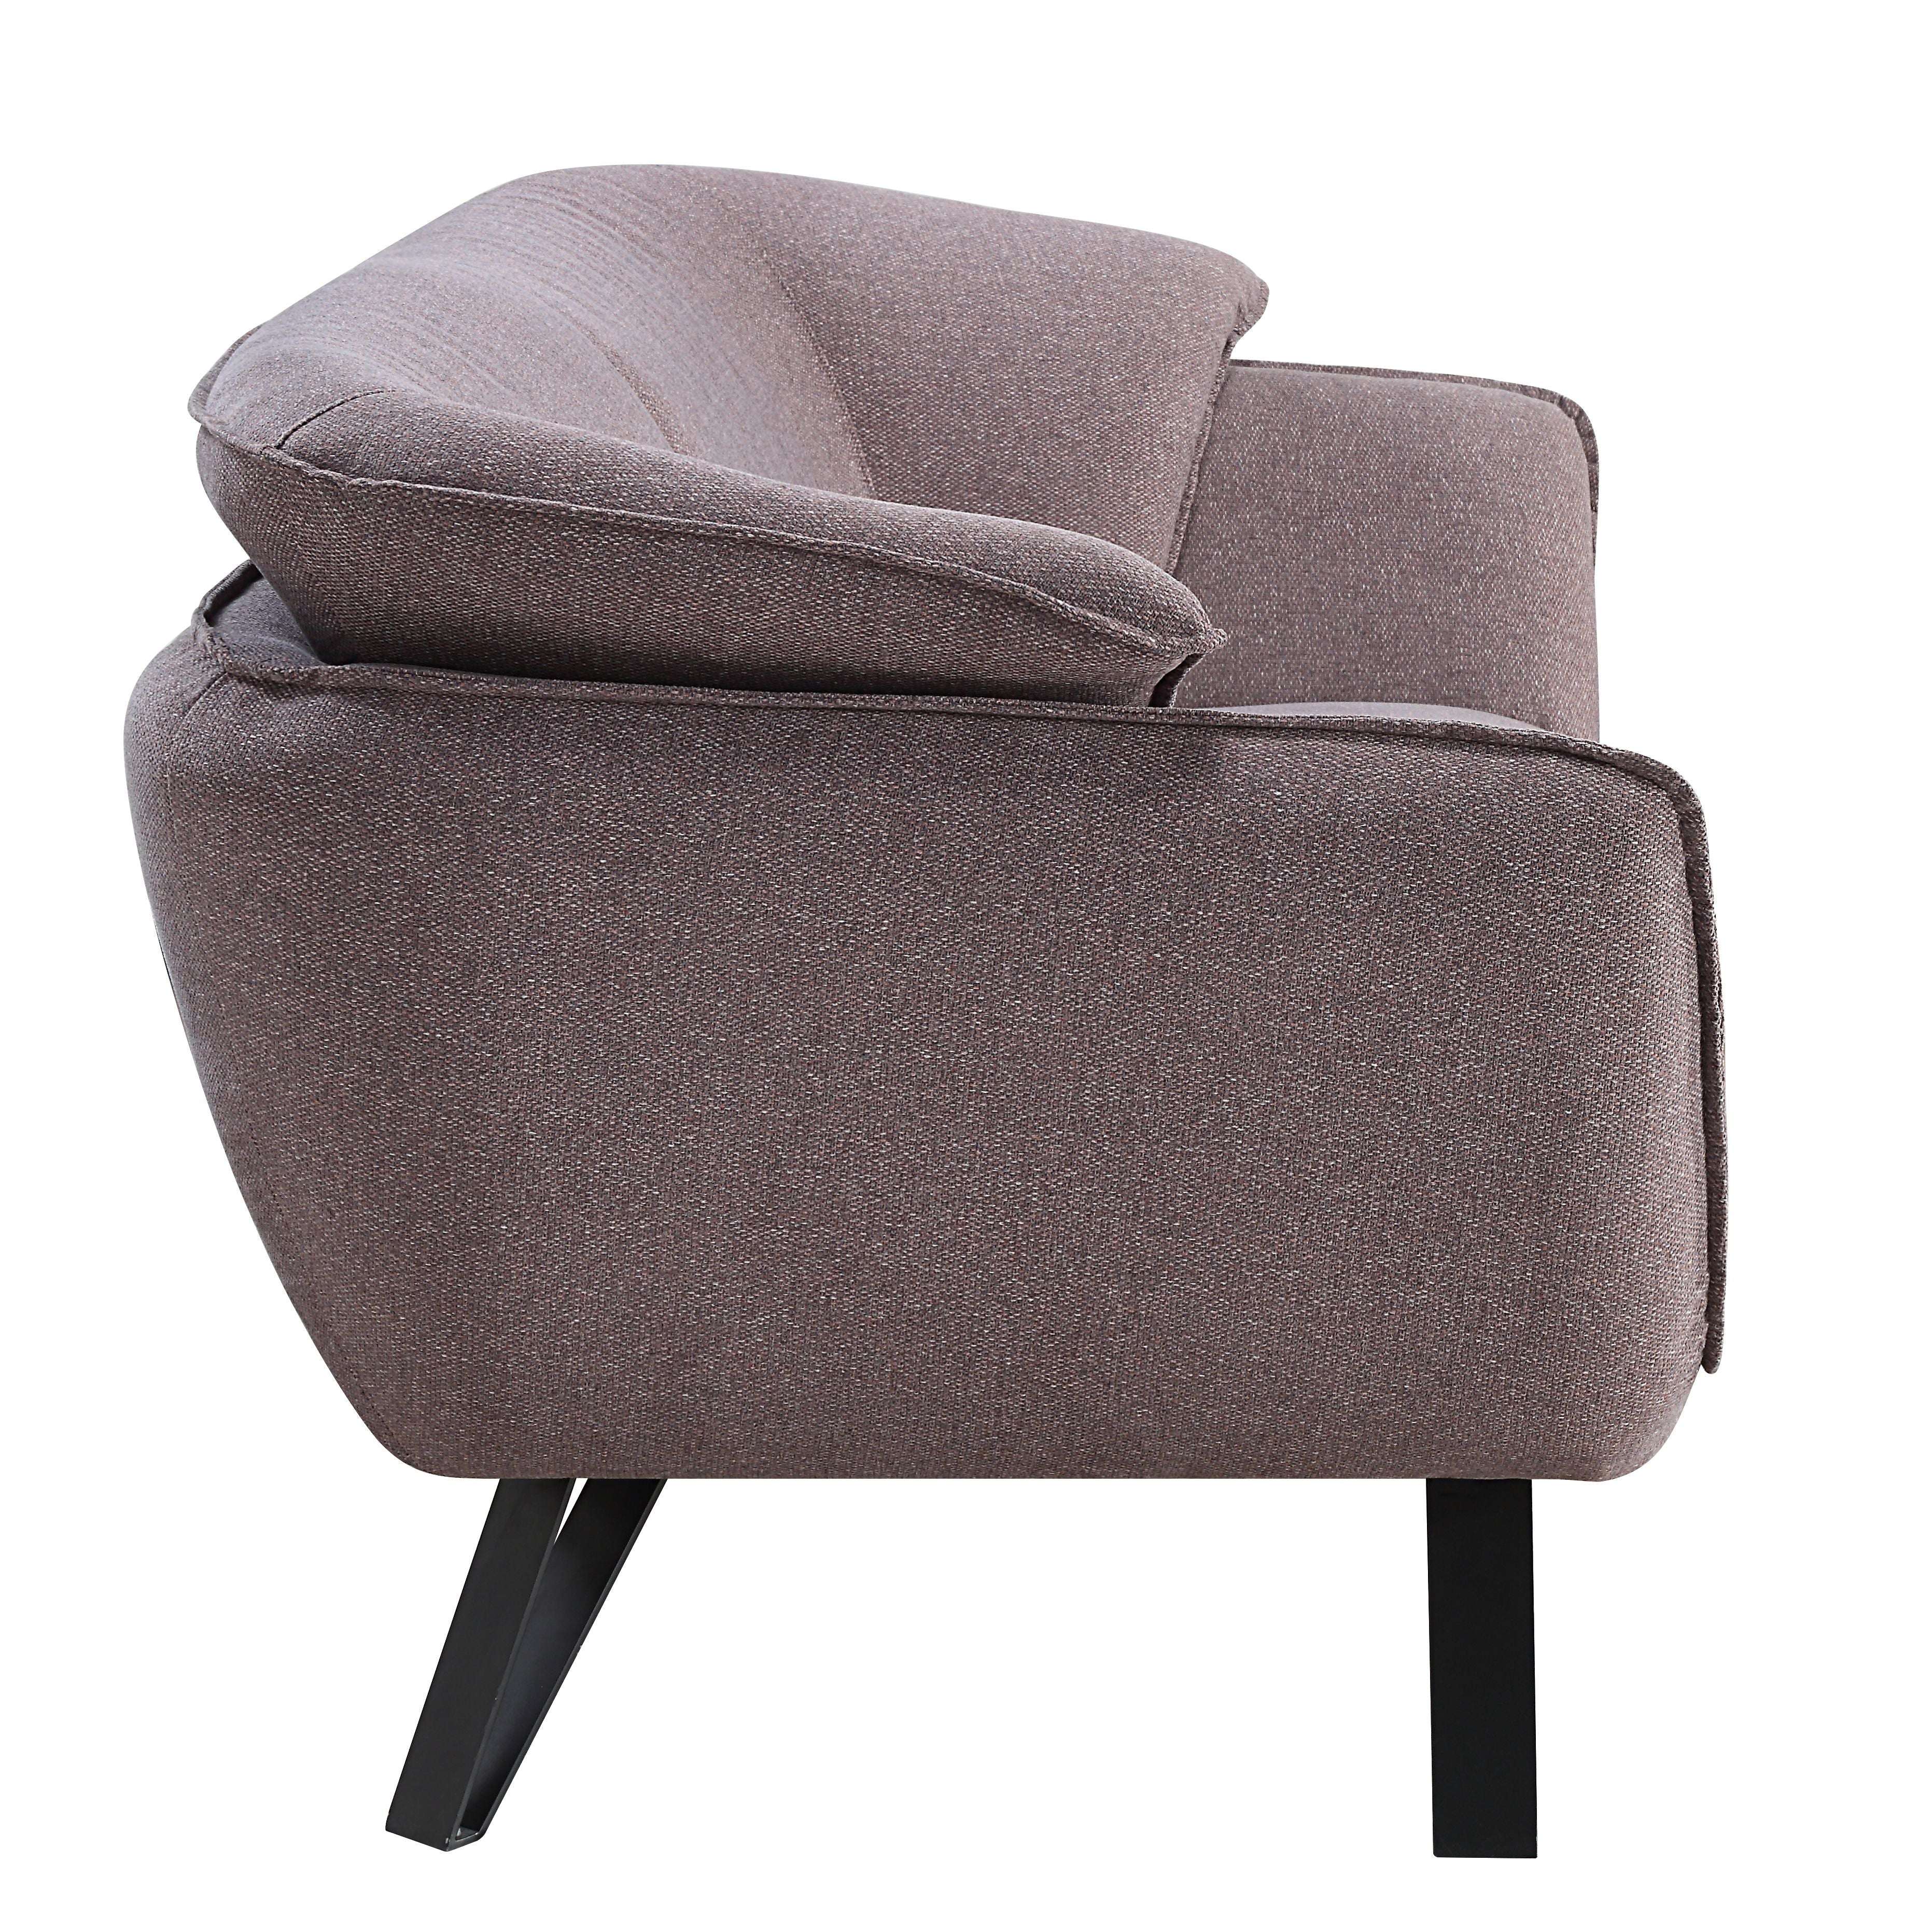 ACME Furniture Sofas & Couches - ACME Dalya Sofa, Gray Linen